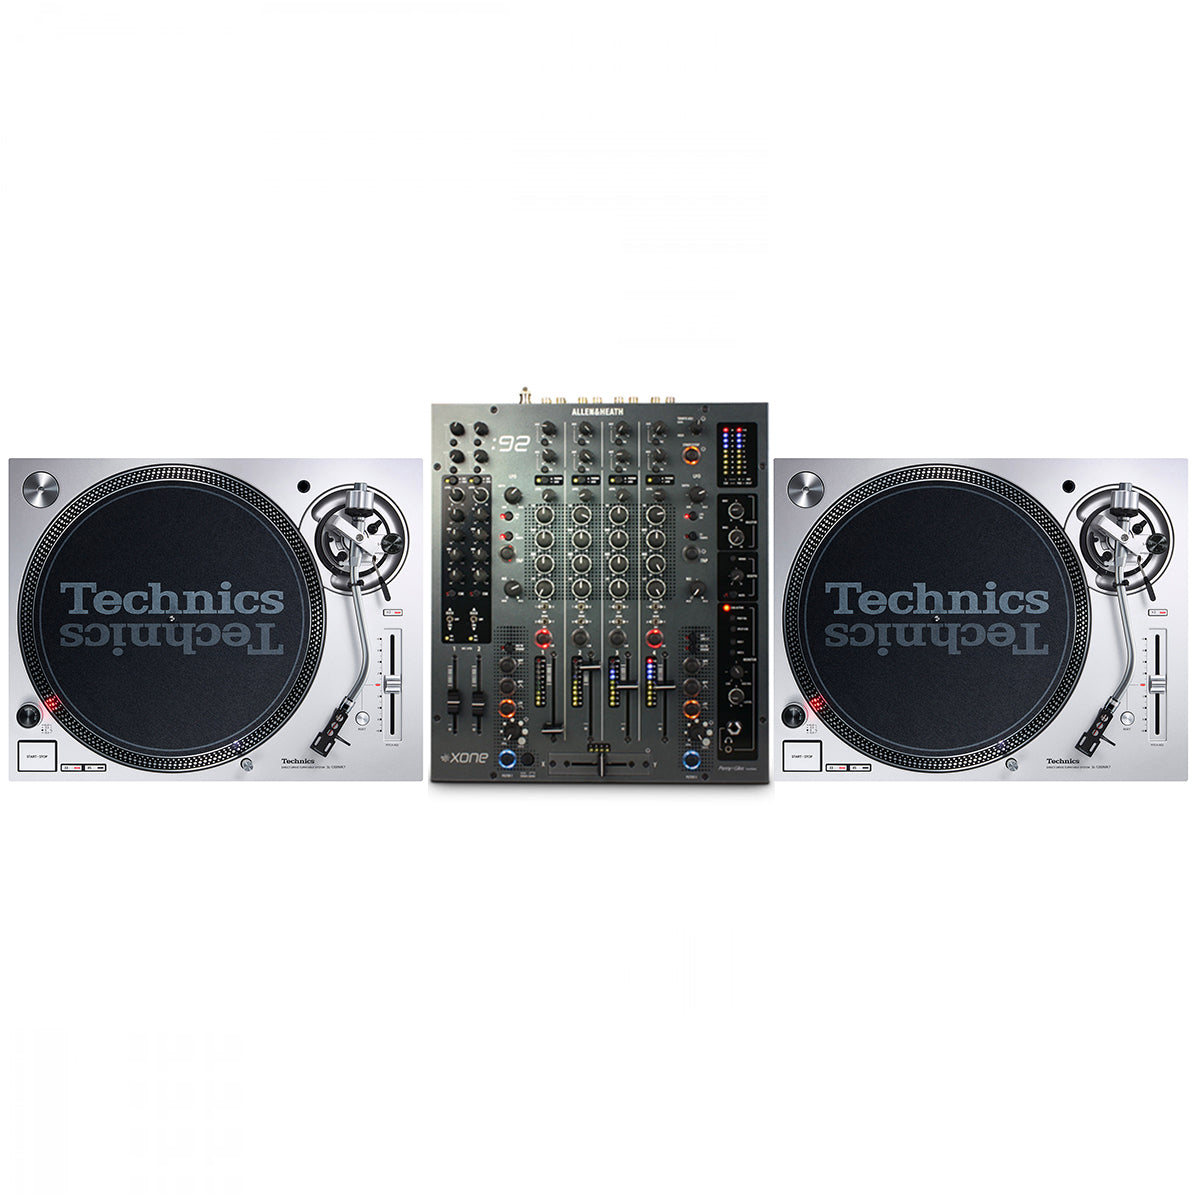 Technics SL1200 MK7 + XONE:92 Mixer